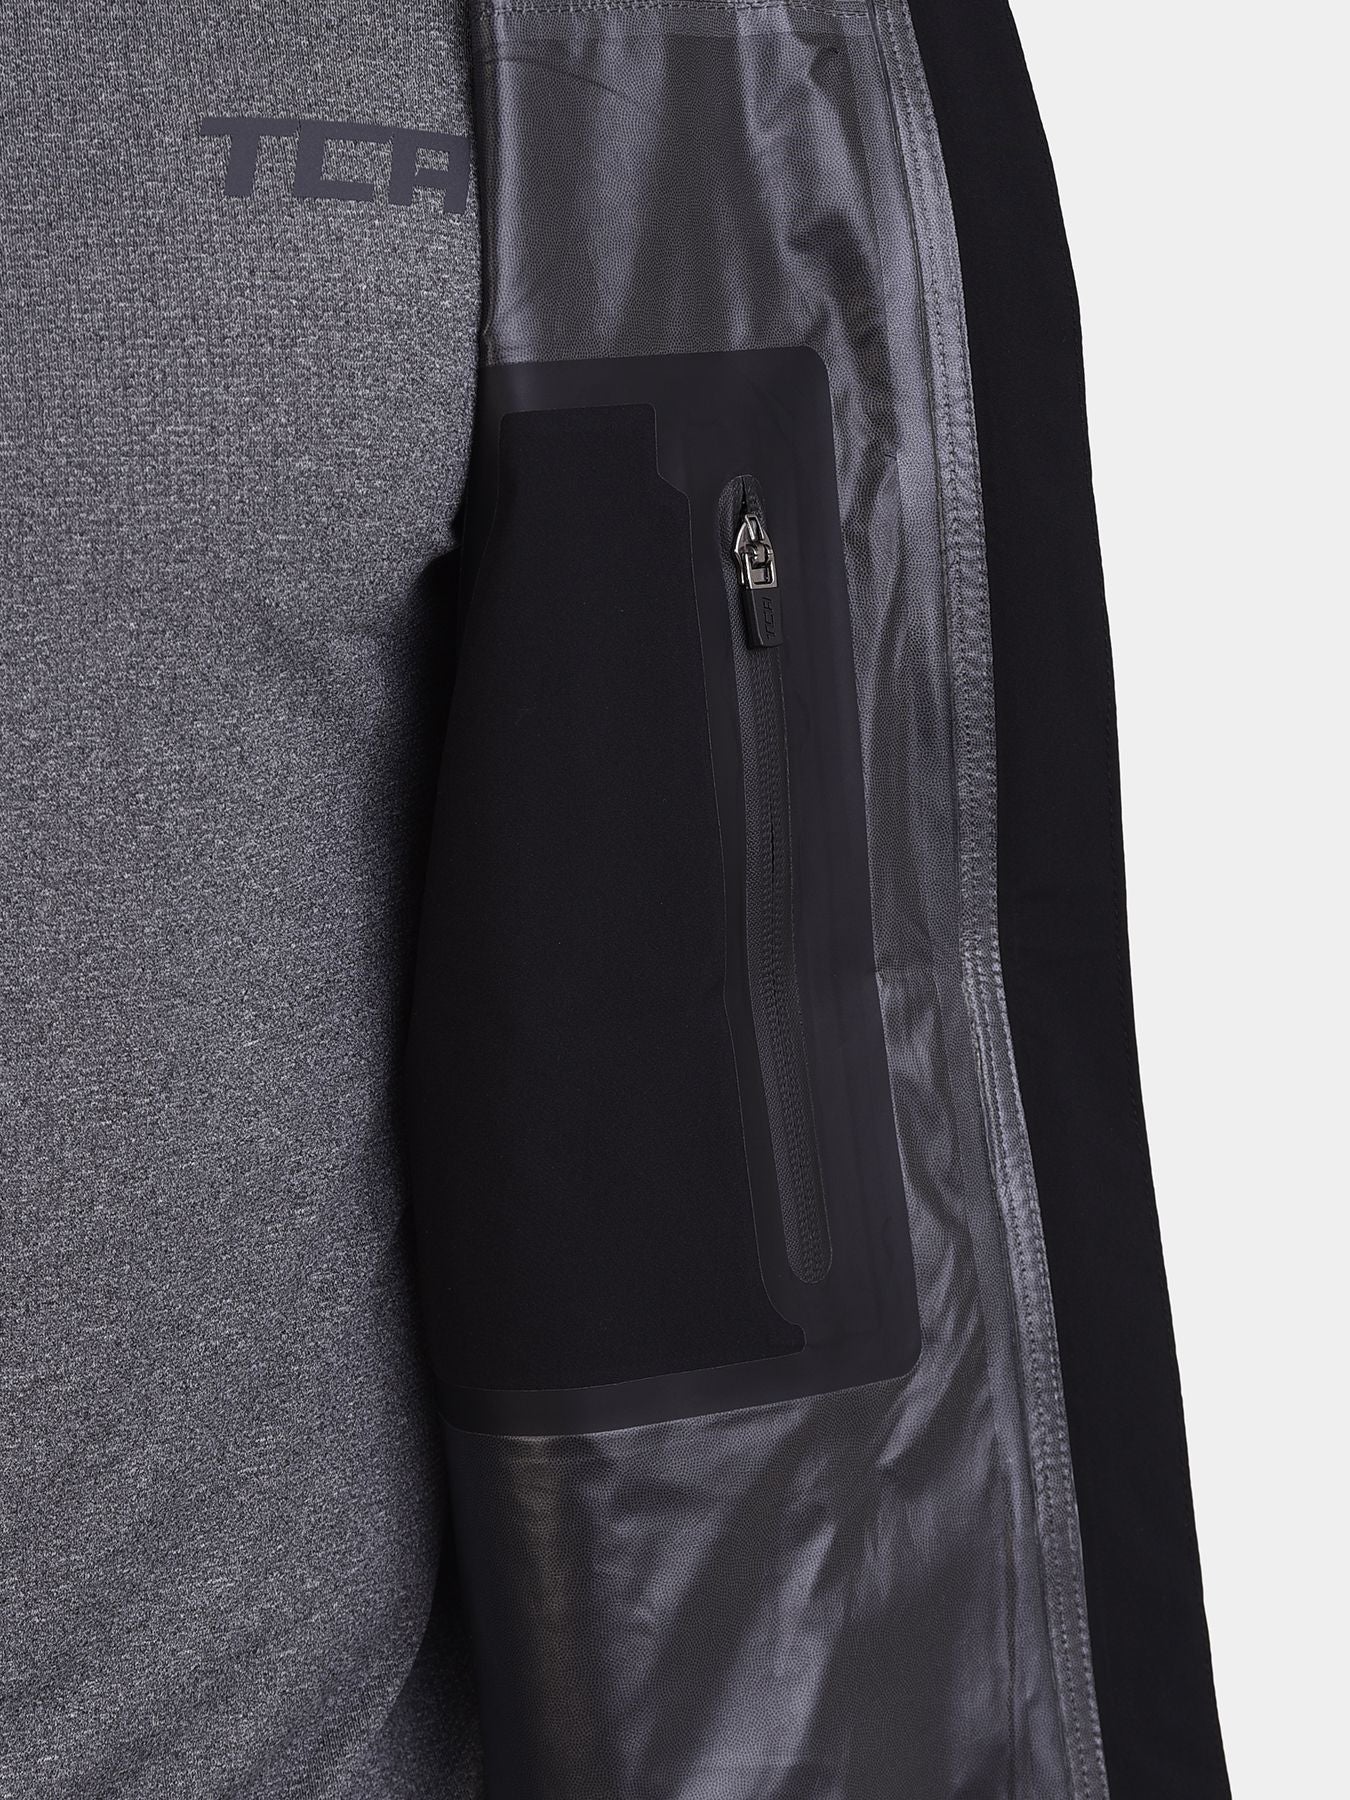 AirLite 2.0 Hooded Waterproof Rain Jacket For Men With Side & Internal Zip Pockets & Reflective Strips